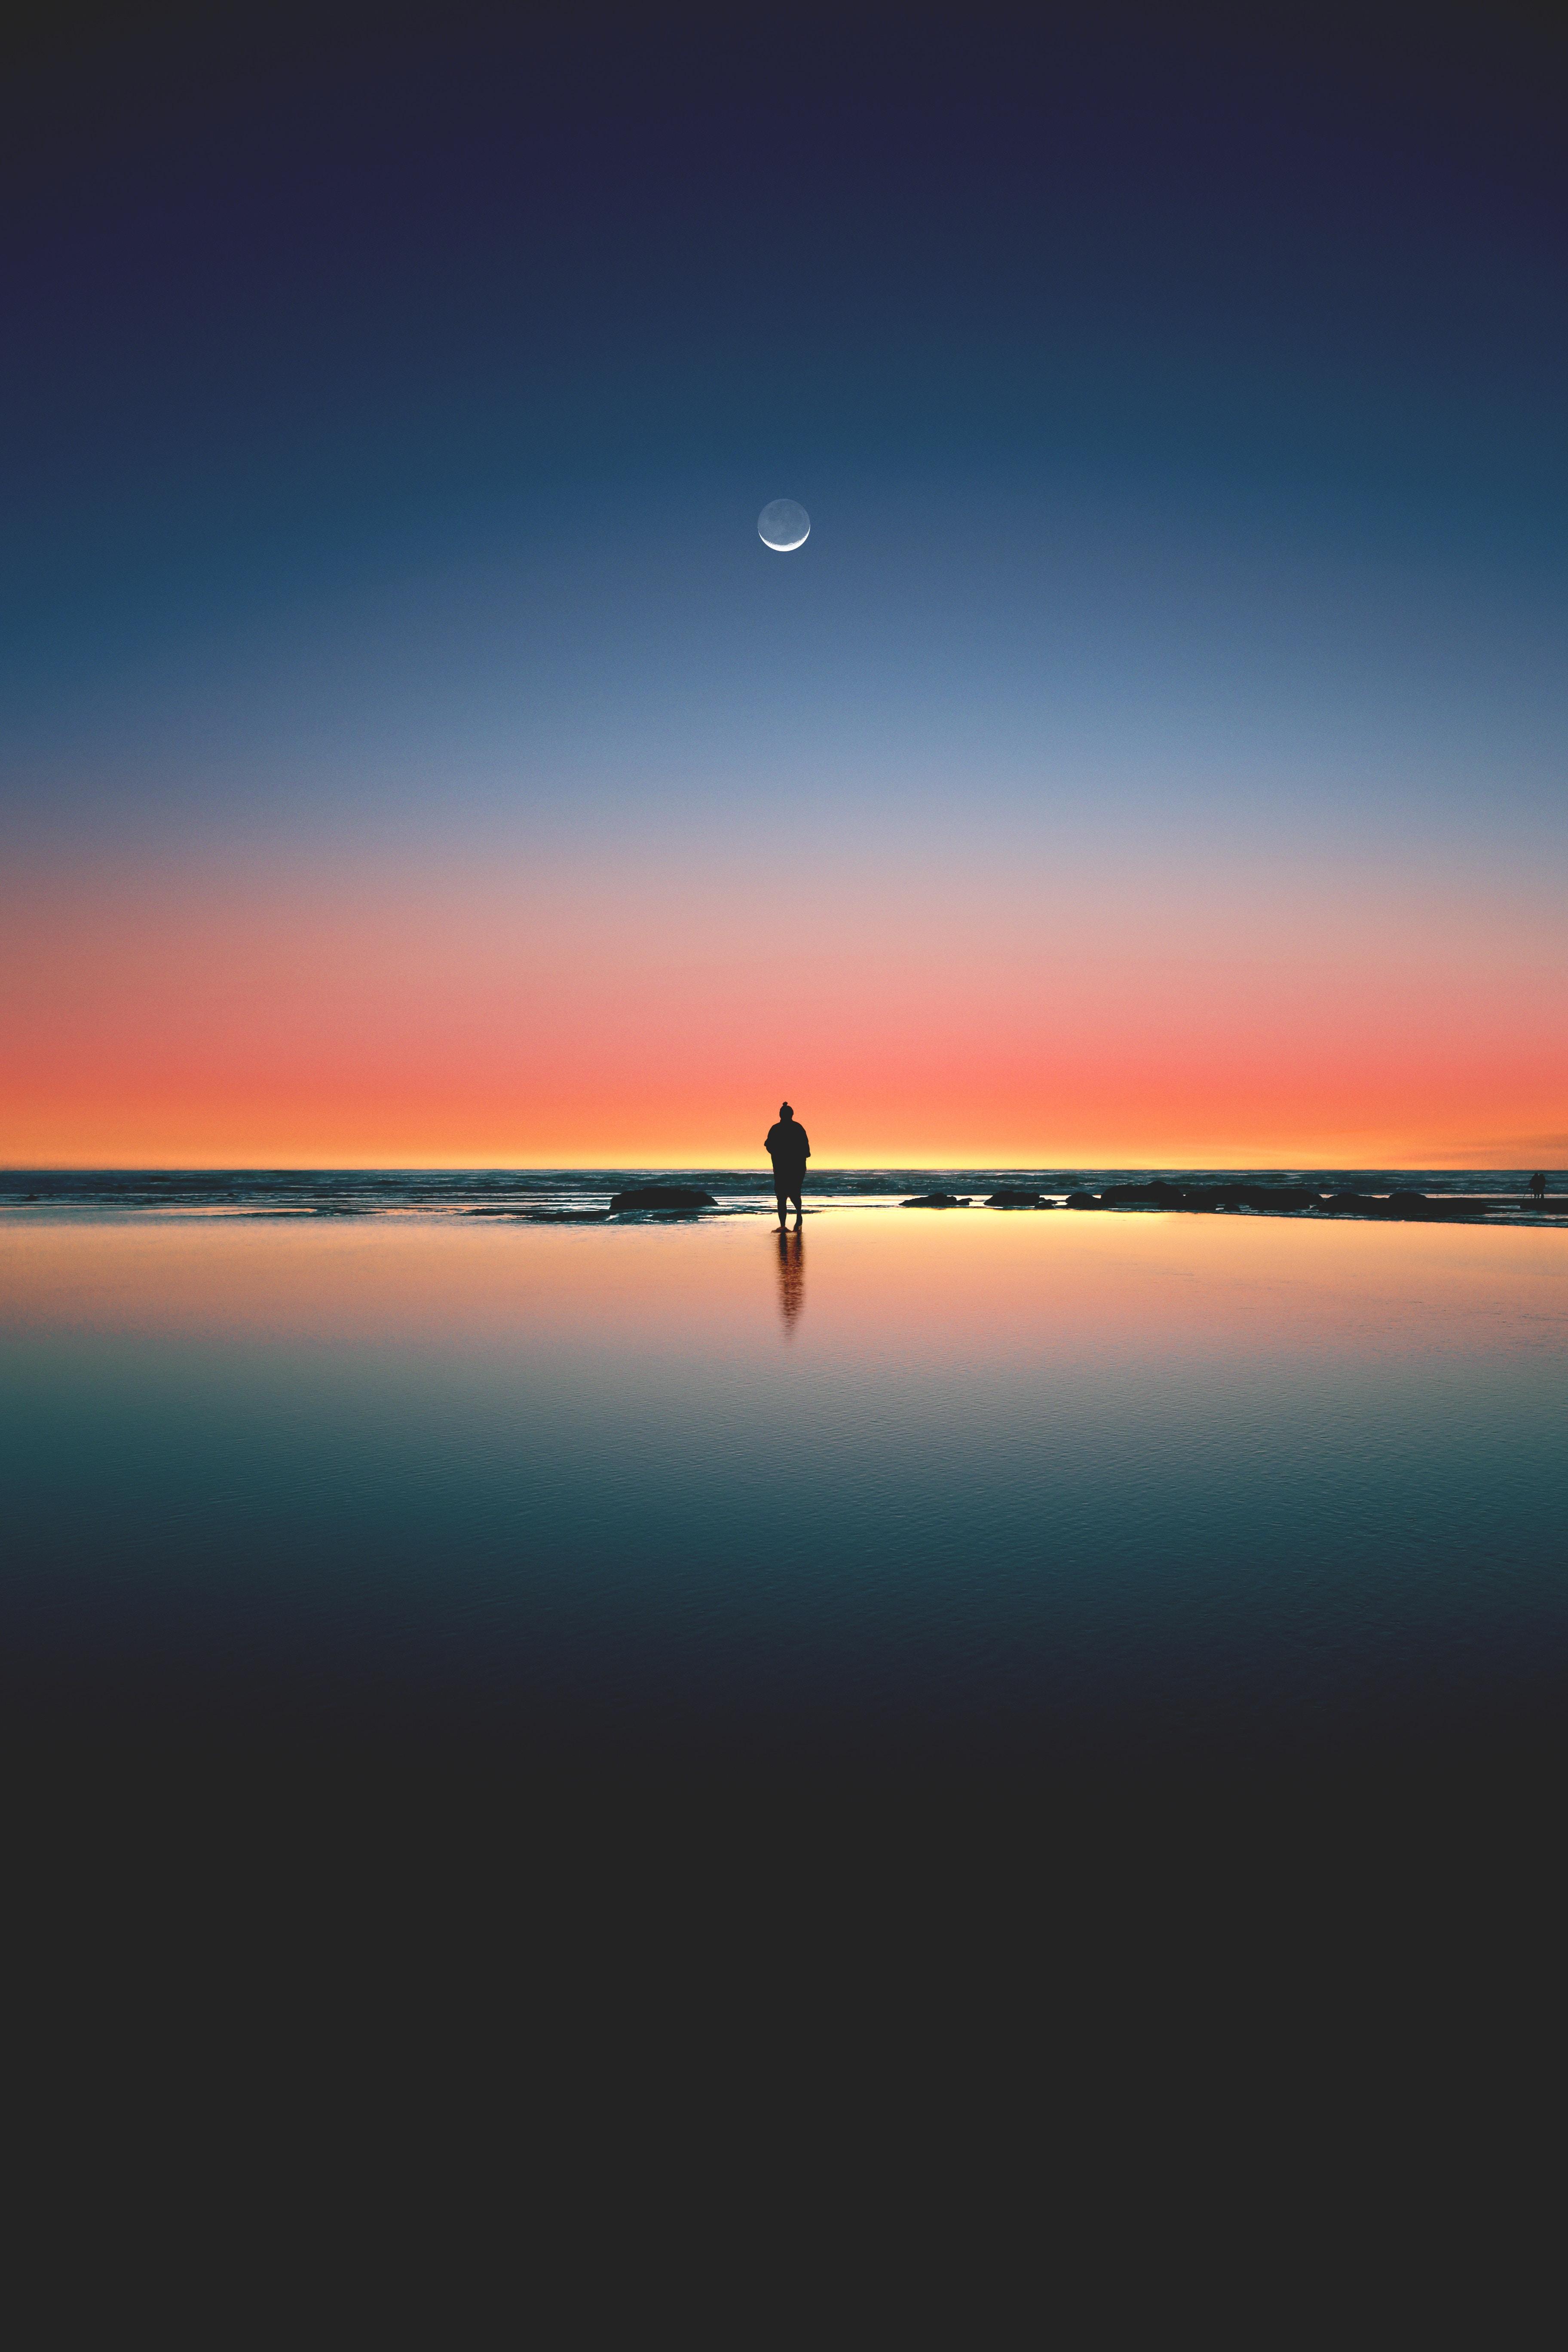 #Moon, K, #Sunset, #Silhouette, #Beach, #Sea, #Alone